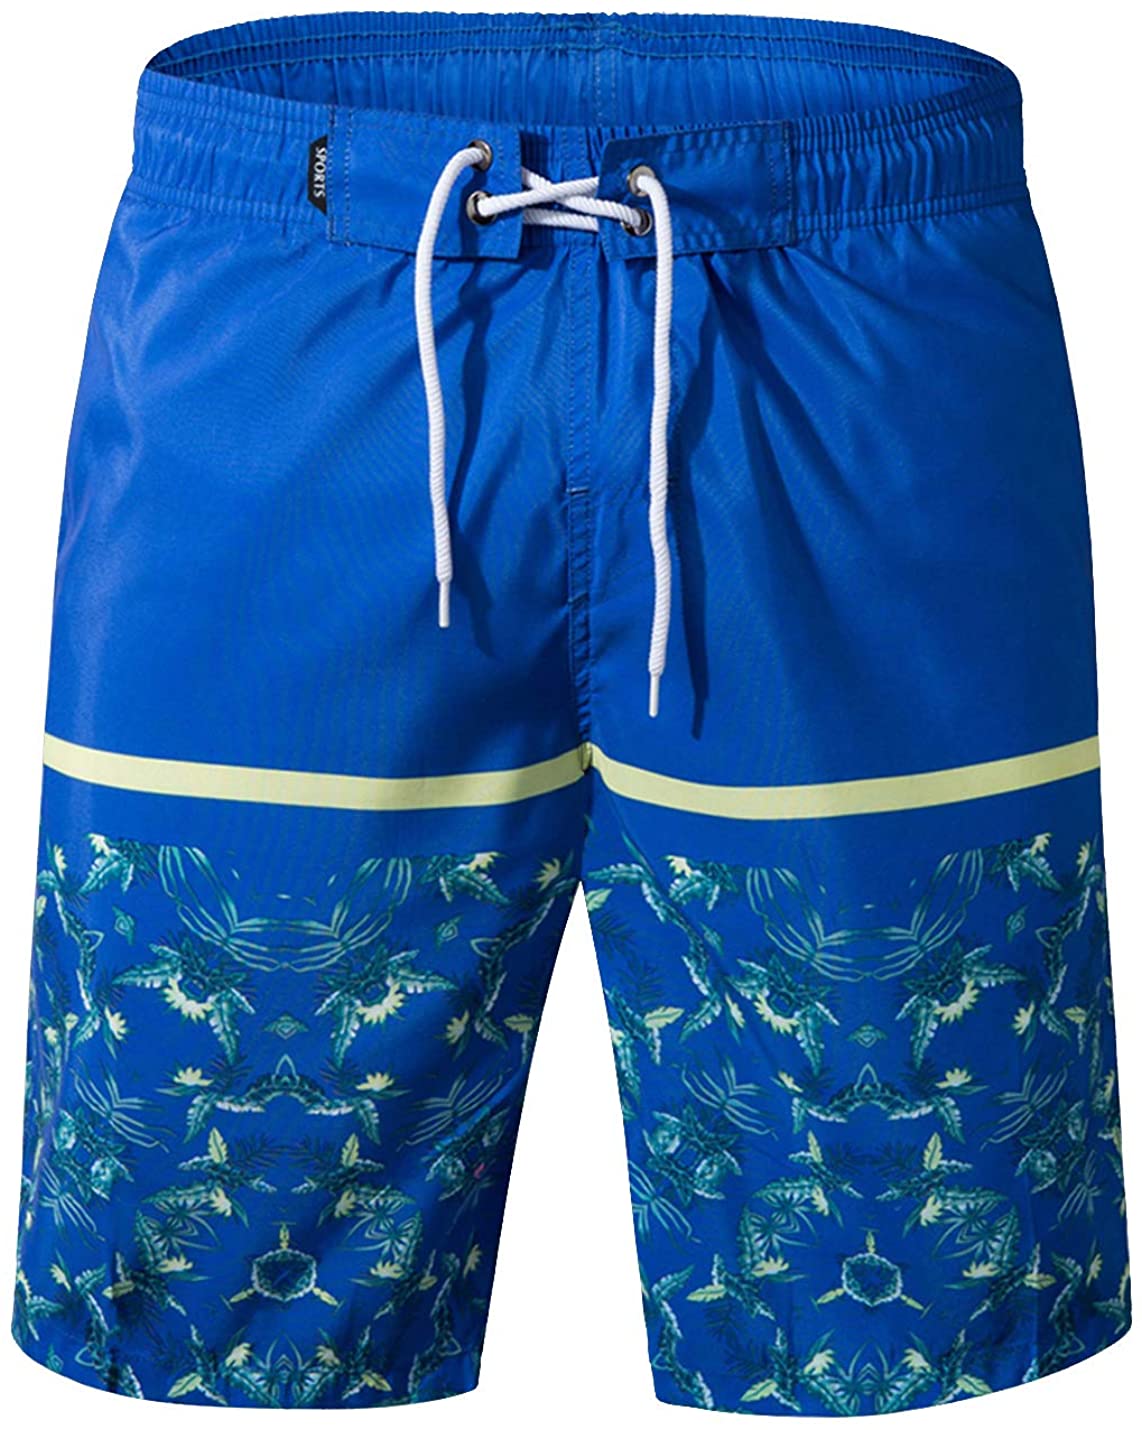 APTRO Men's Swimming Trunks with Pockets Beach Swimwear Quick Dry ...